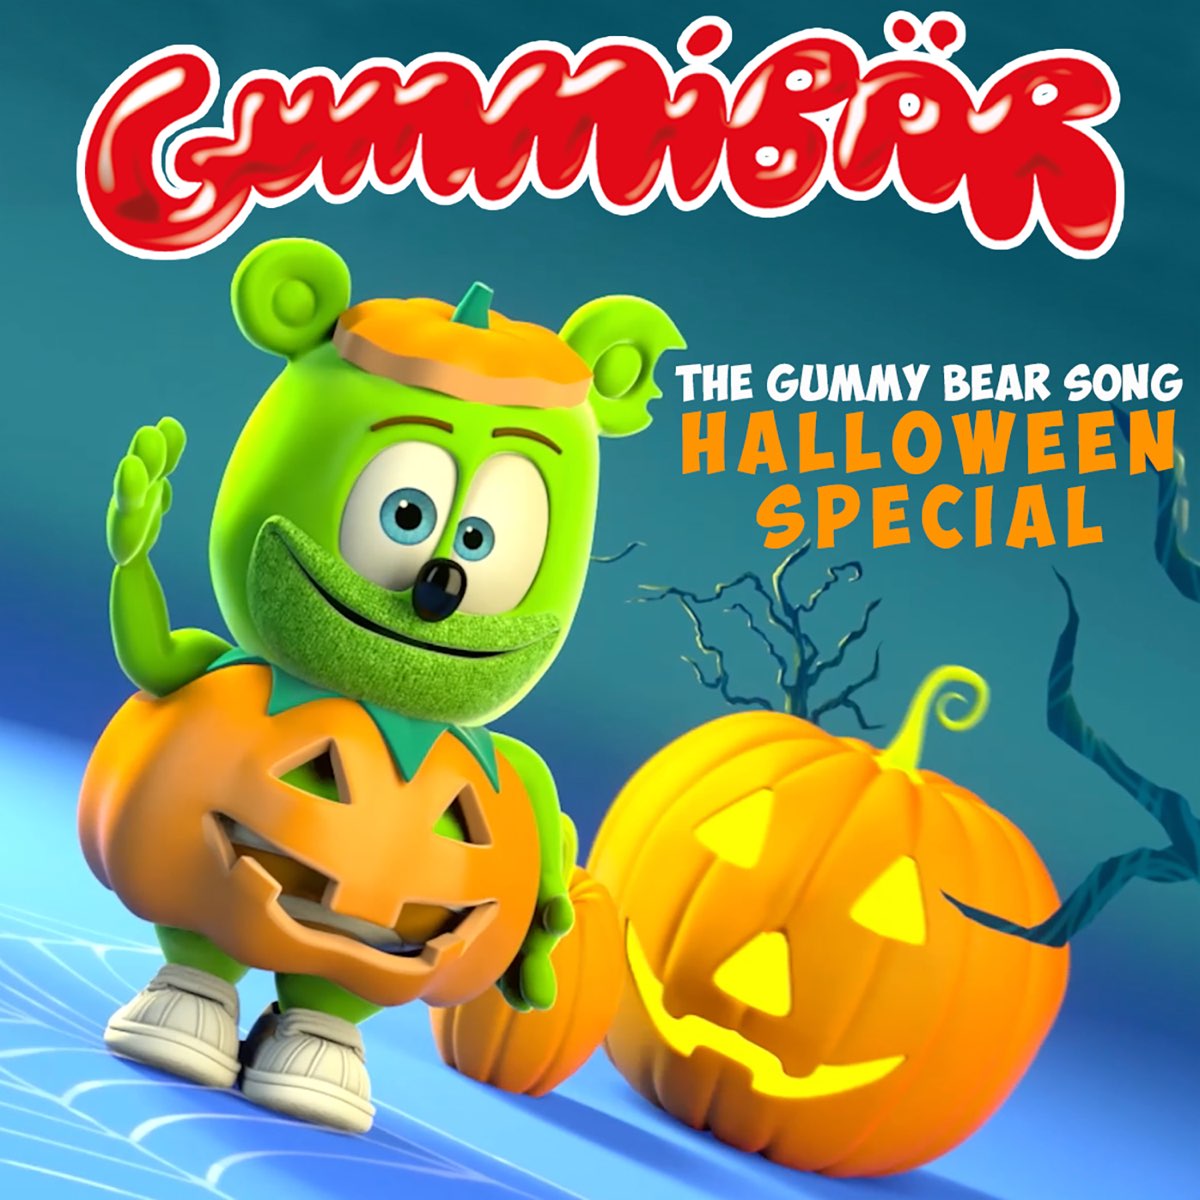 Cotton Eye Joe - Single - Album by Gummy Bear - Apple Music